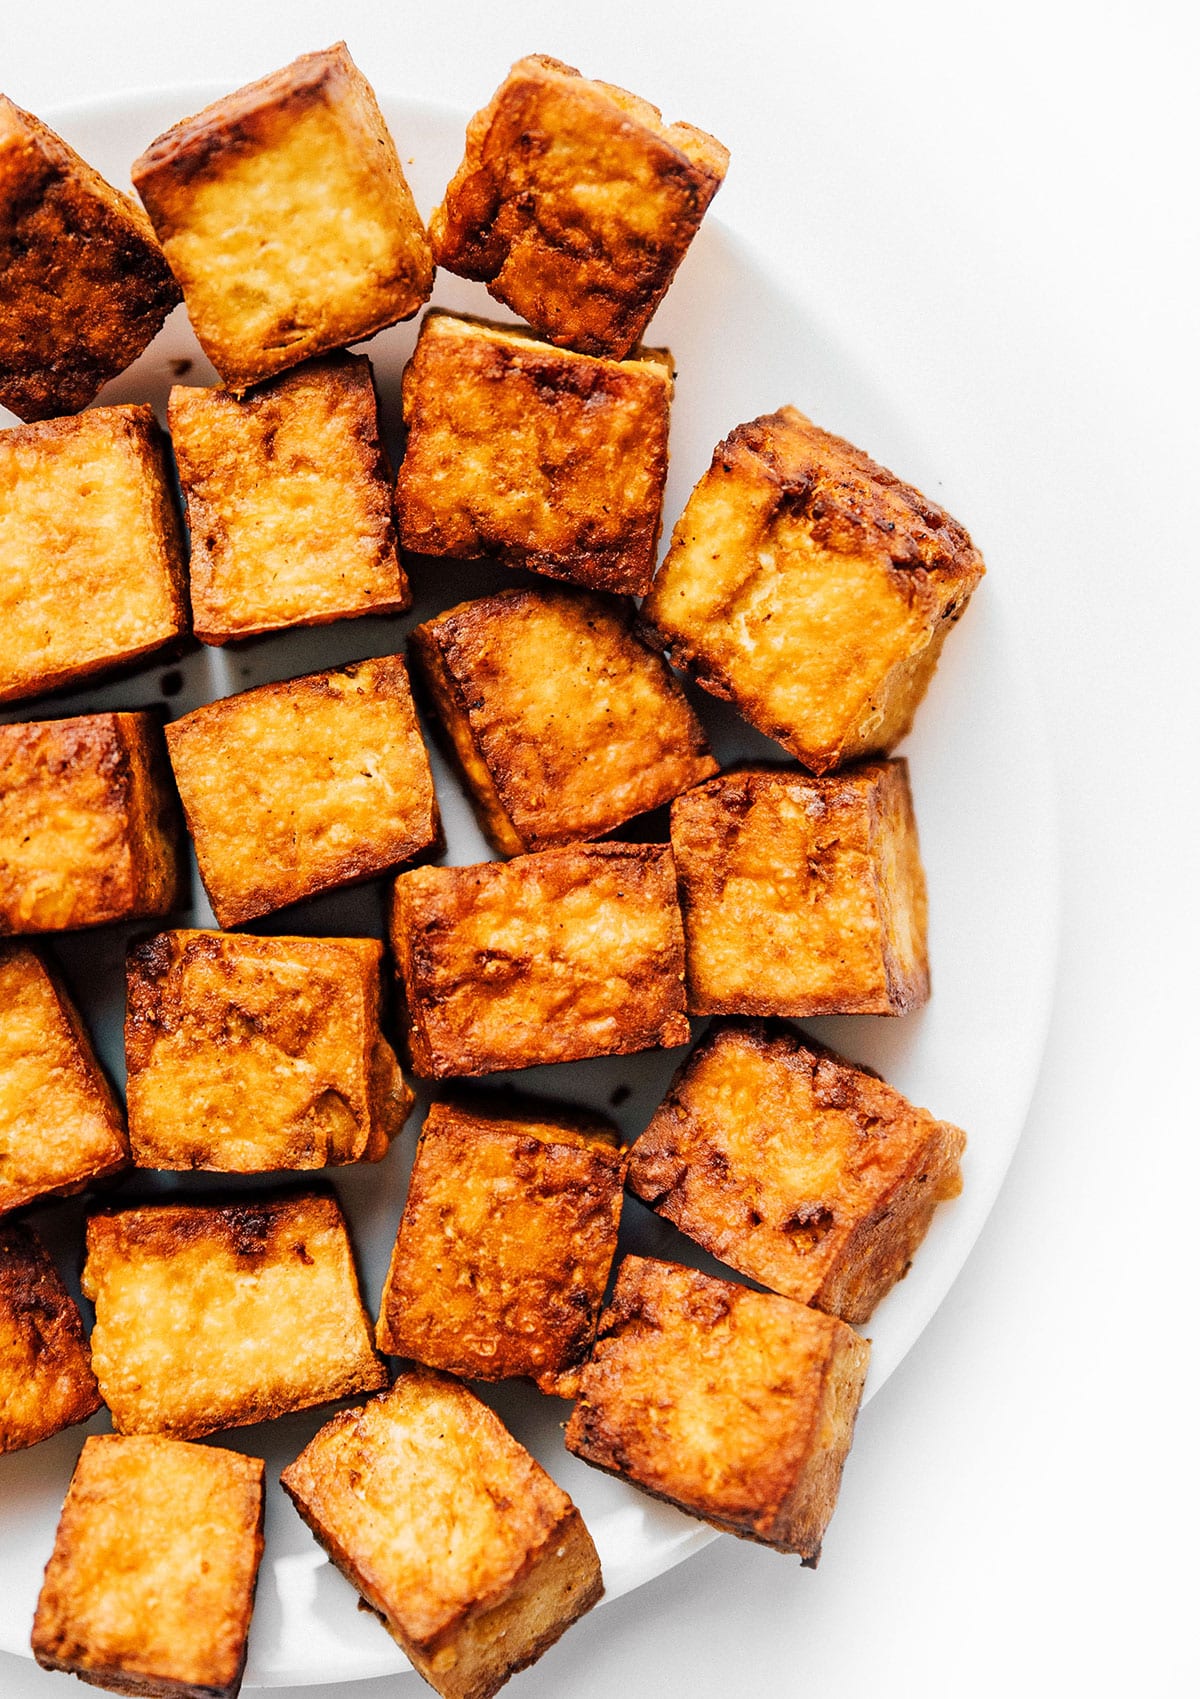 Blocks of crispy air fried tofu on a white plate.